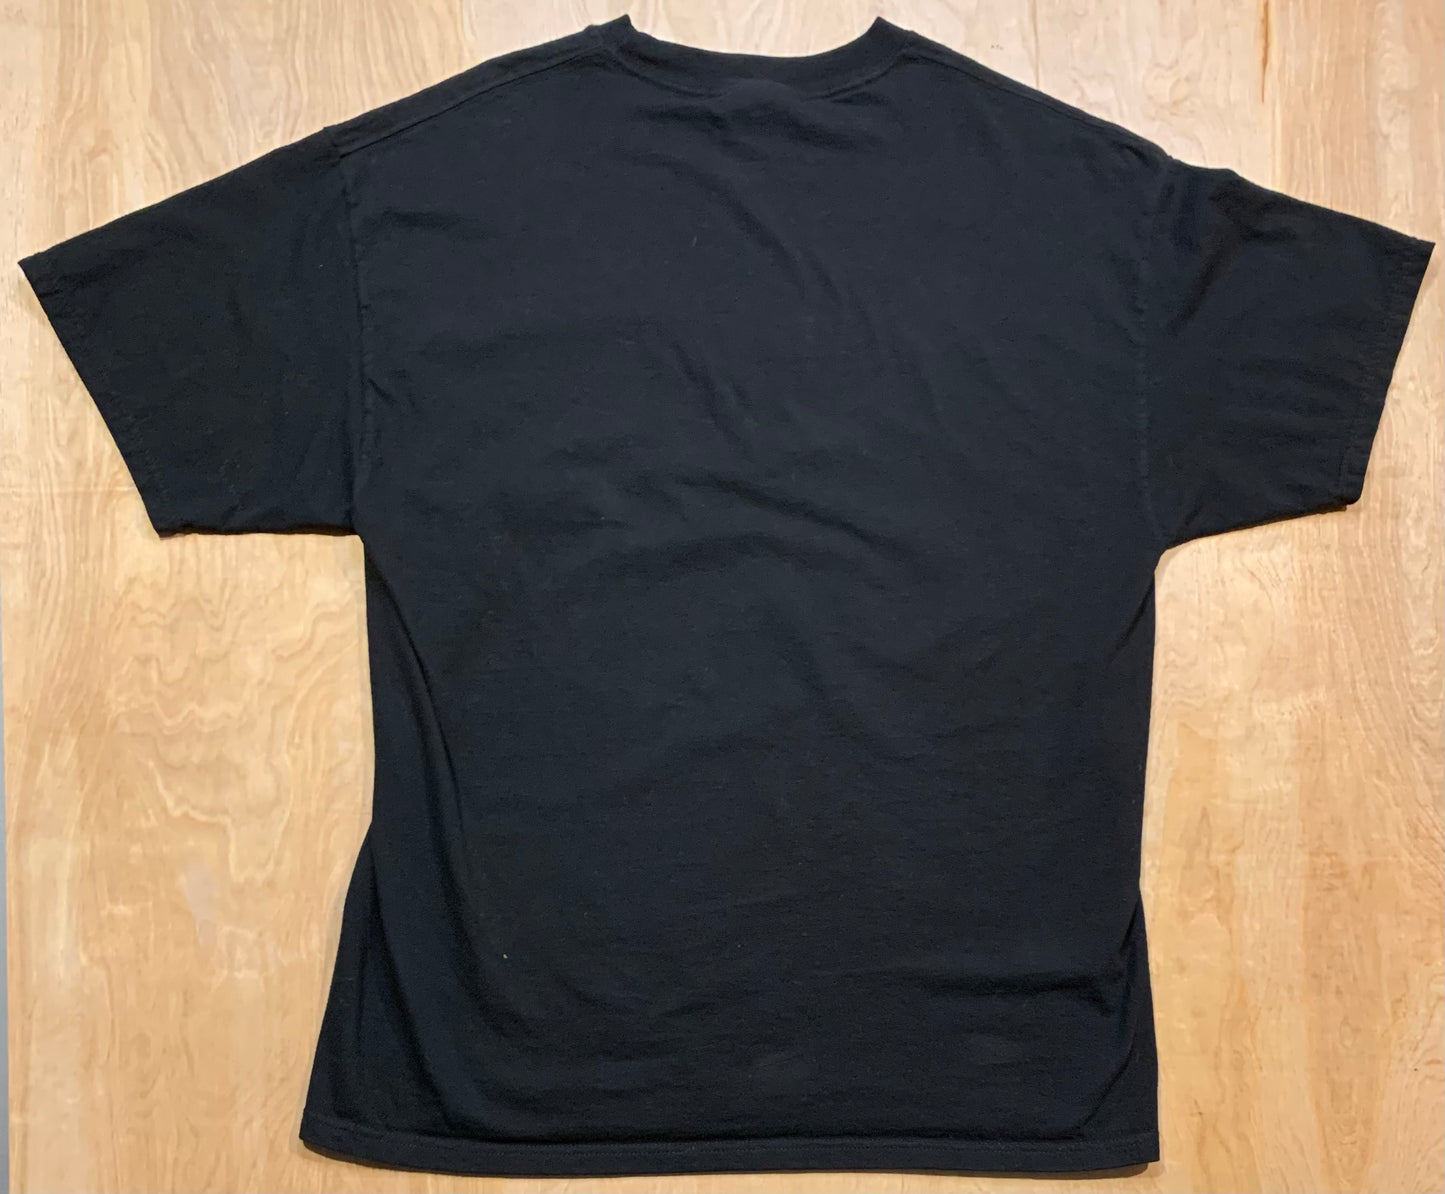 90's South Dakota Eagle Single Stitch T-Shirt